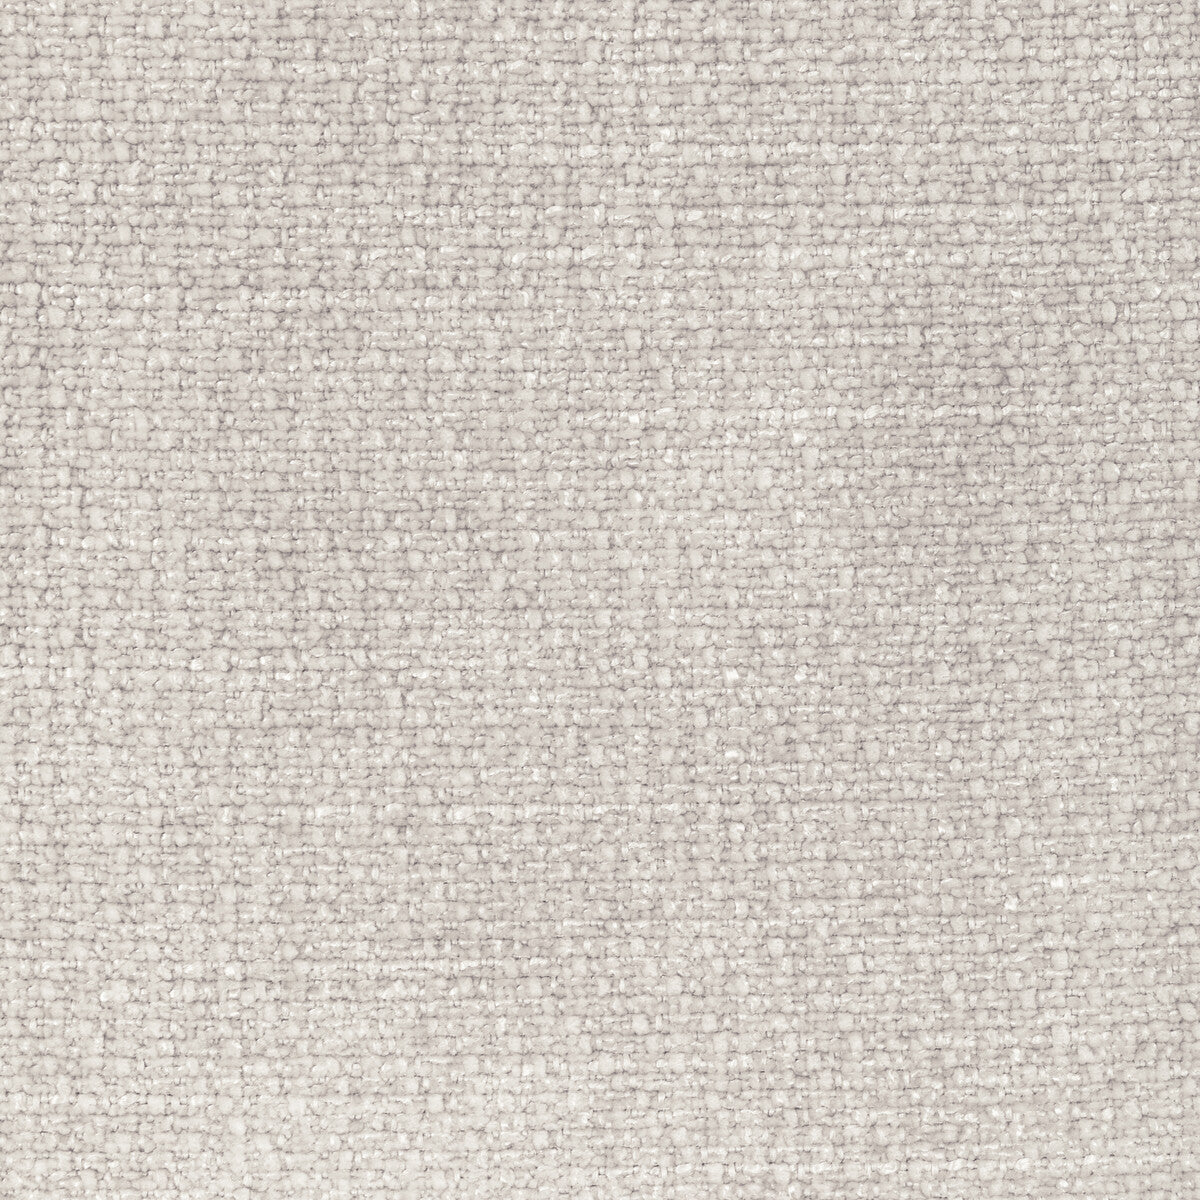 Kravet Smart fabric in 36578-52 color - pattern 36578.52.0 - by Kravet Smart in the Performance Kravetarmor collection